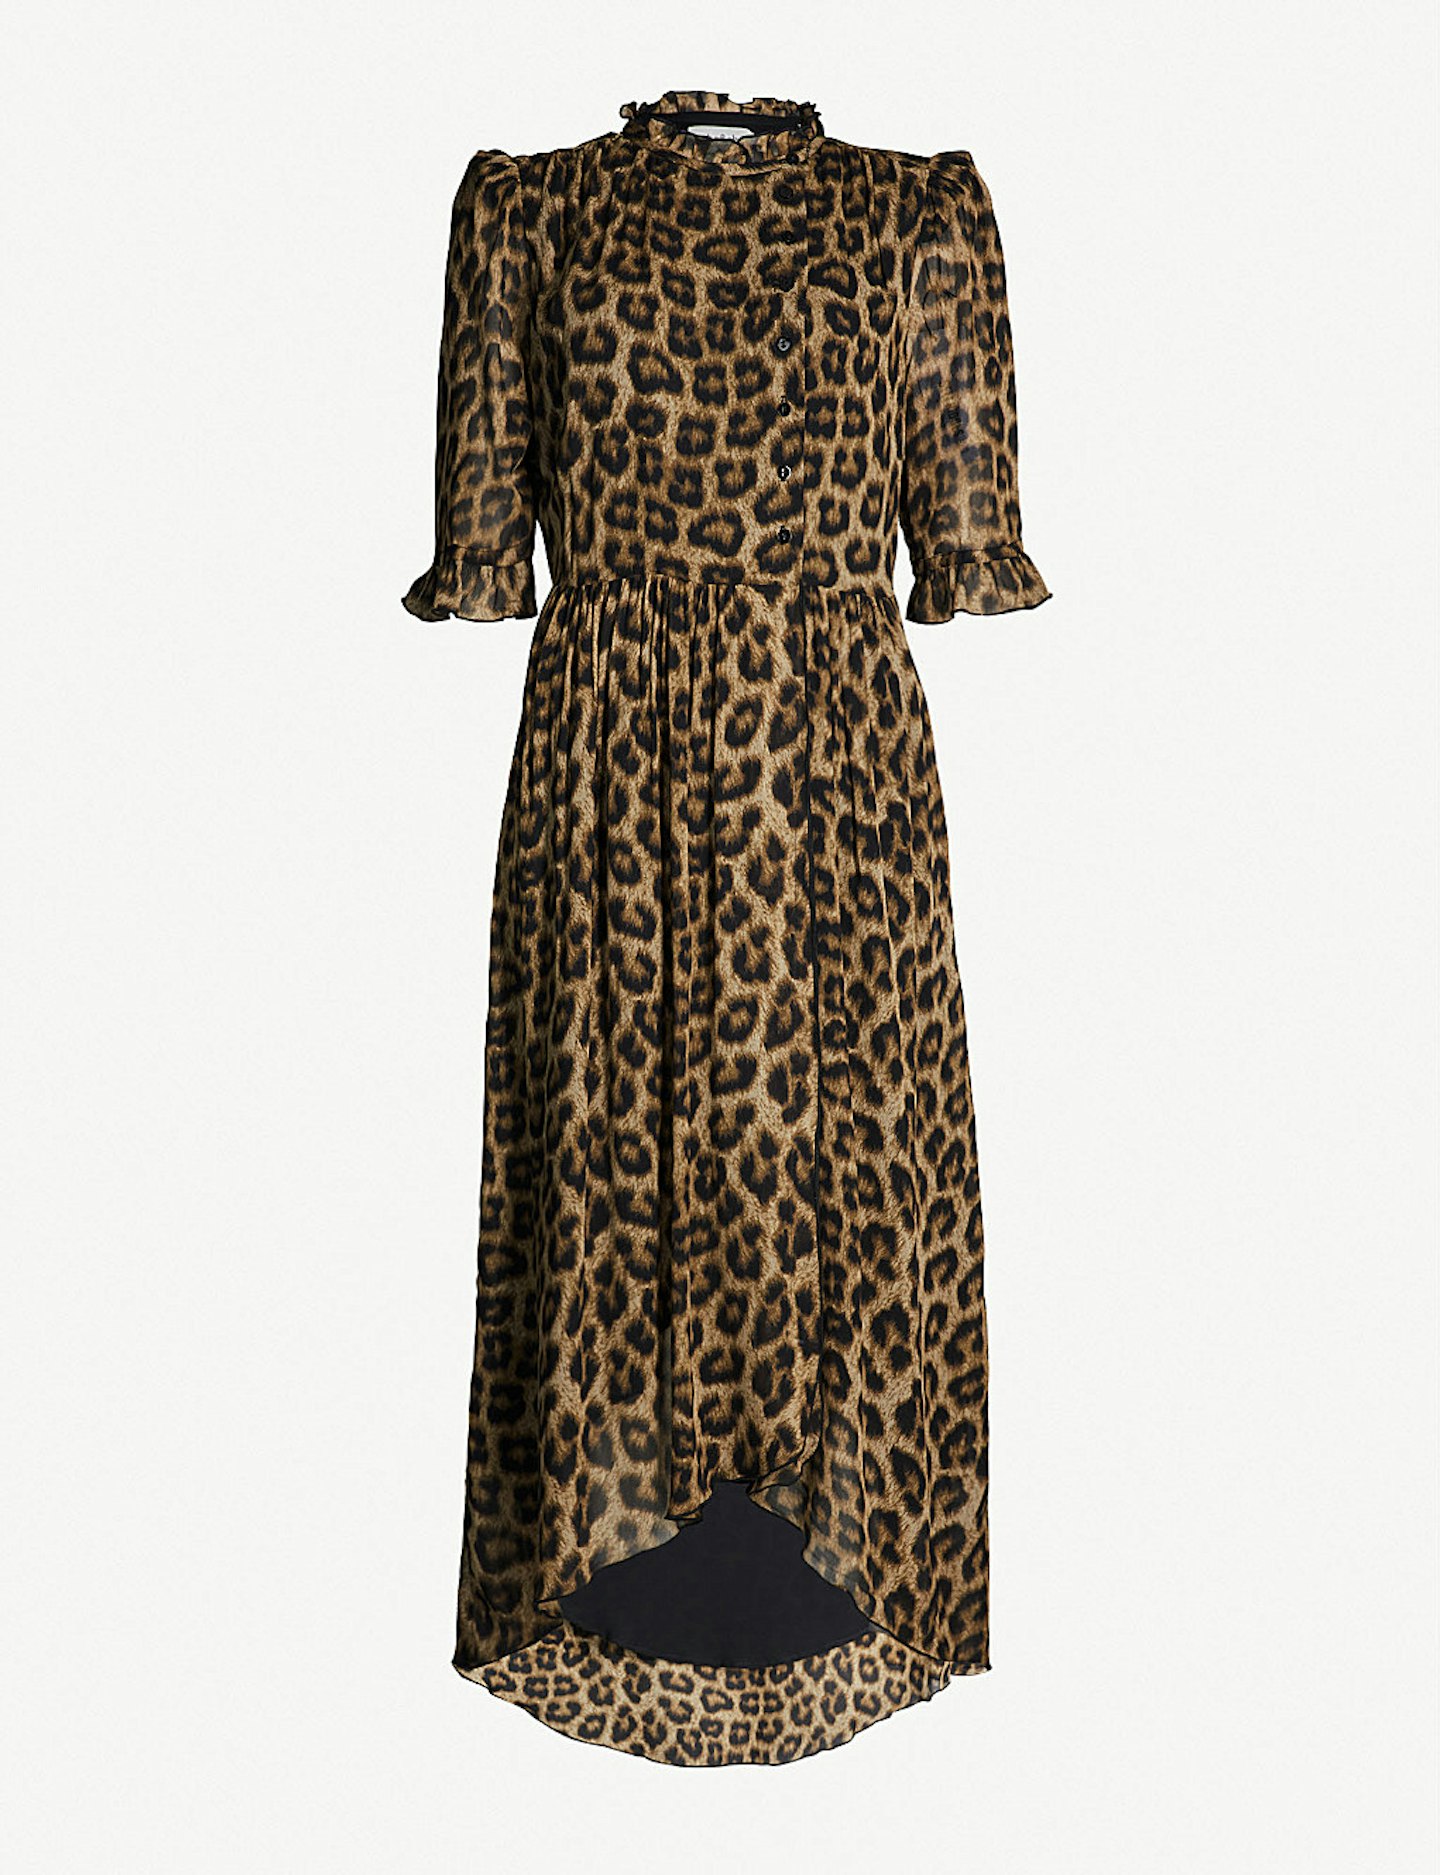 Ba&sh, Leopard Print Crepe Dress, £275